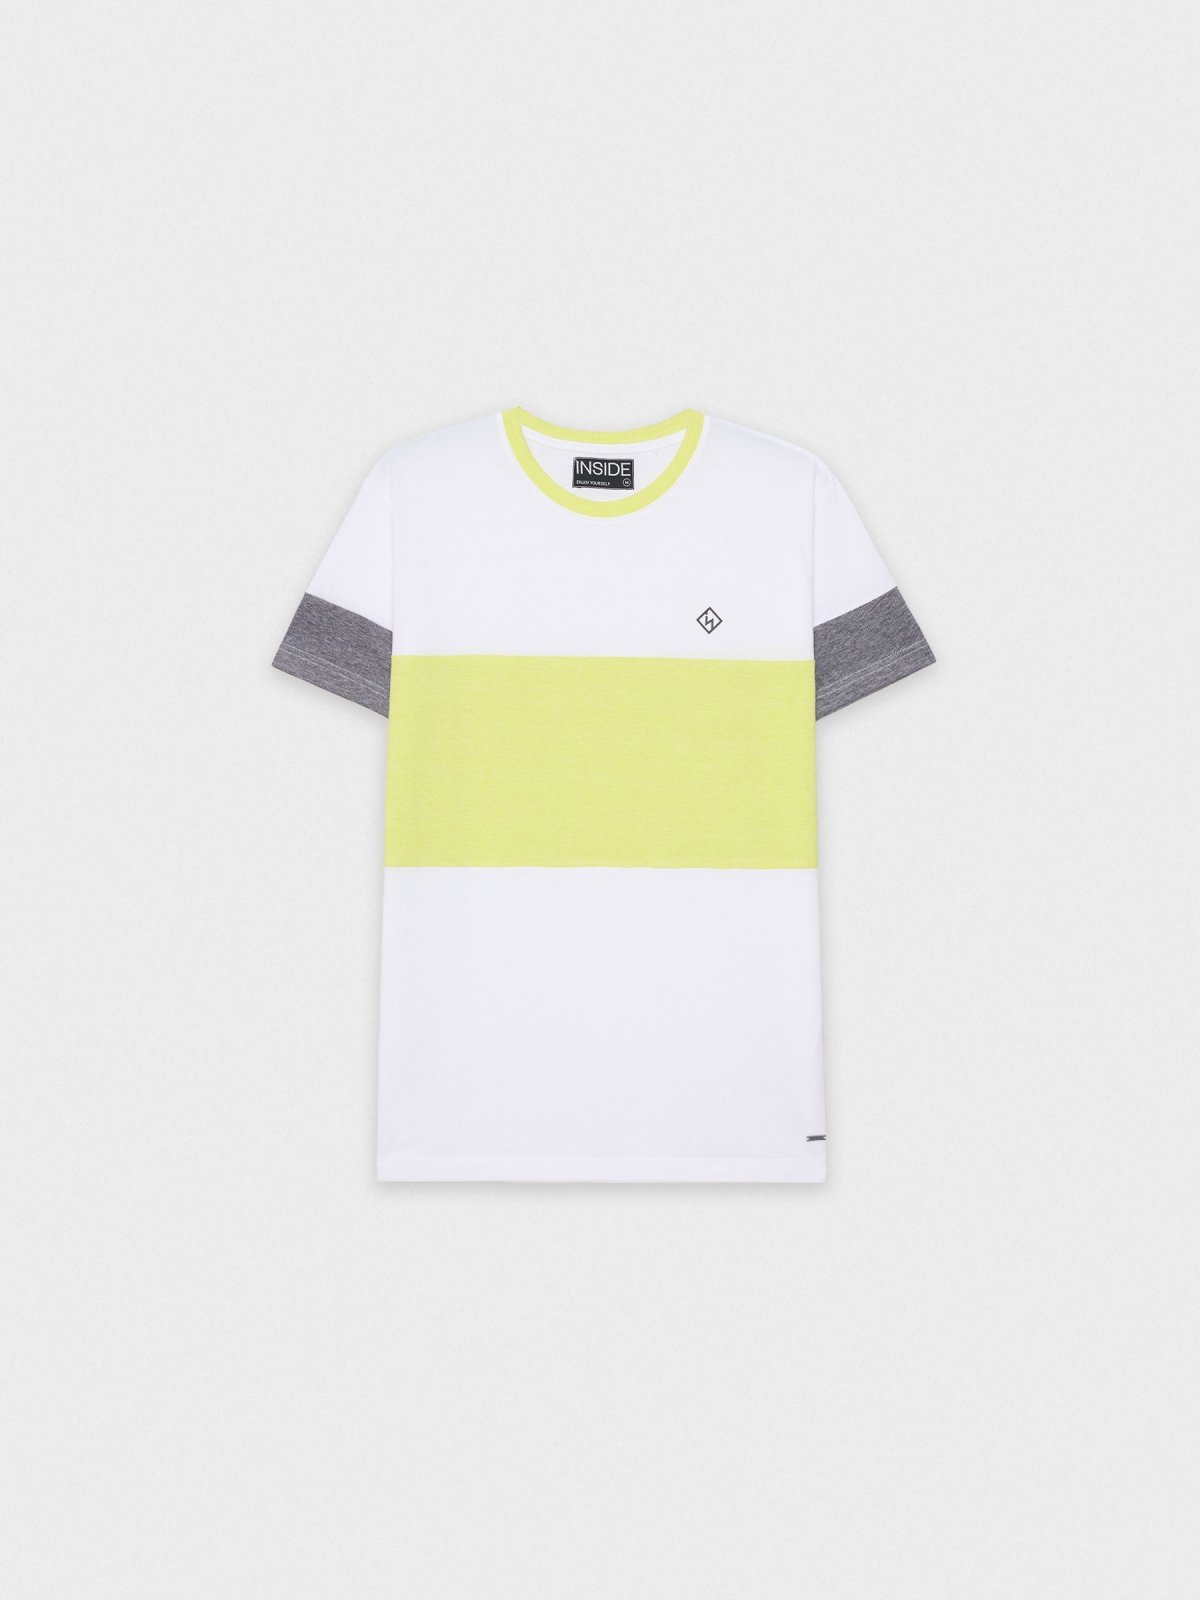  Colour block t-shirt white